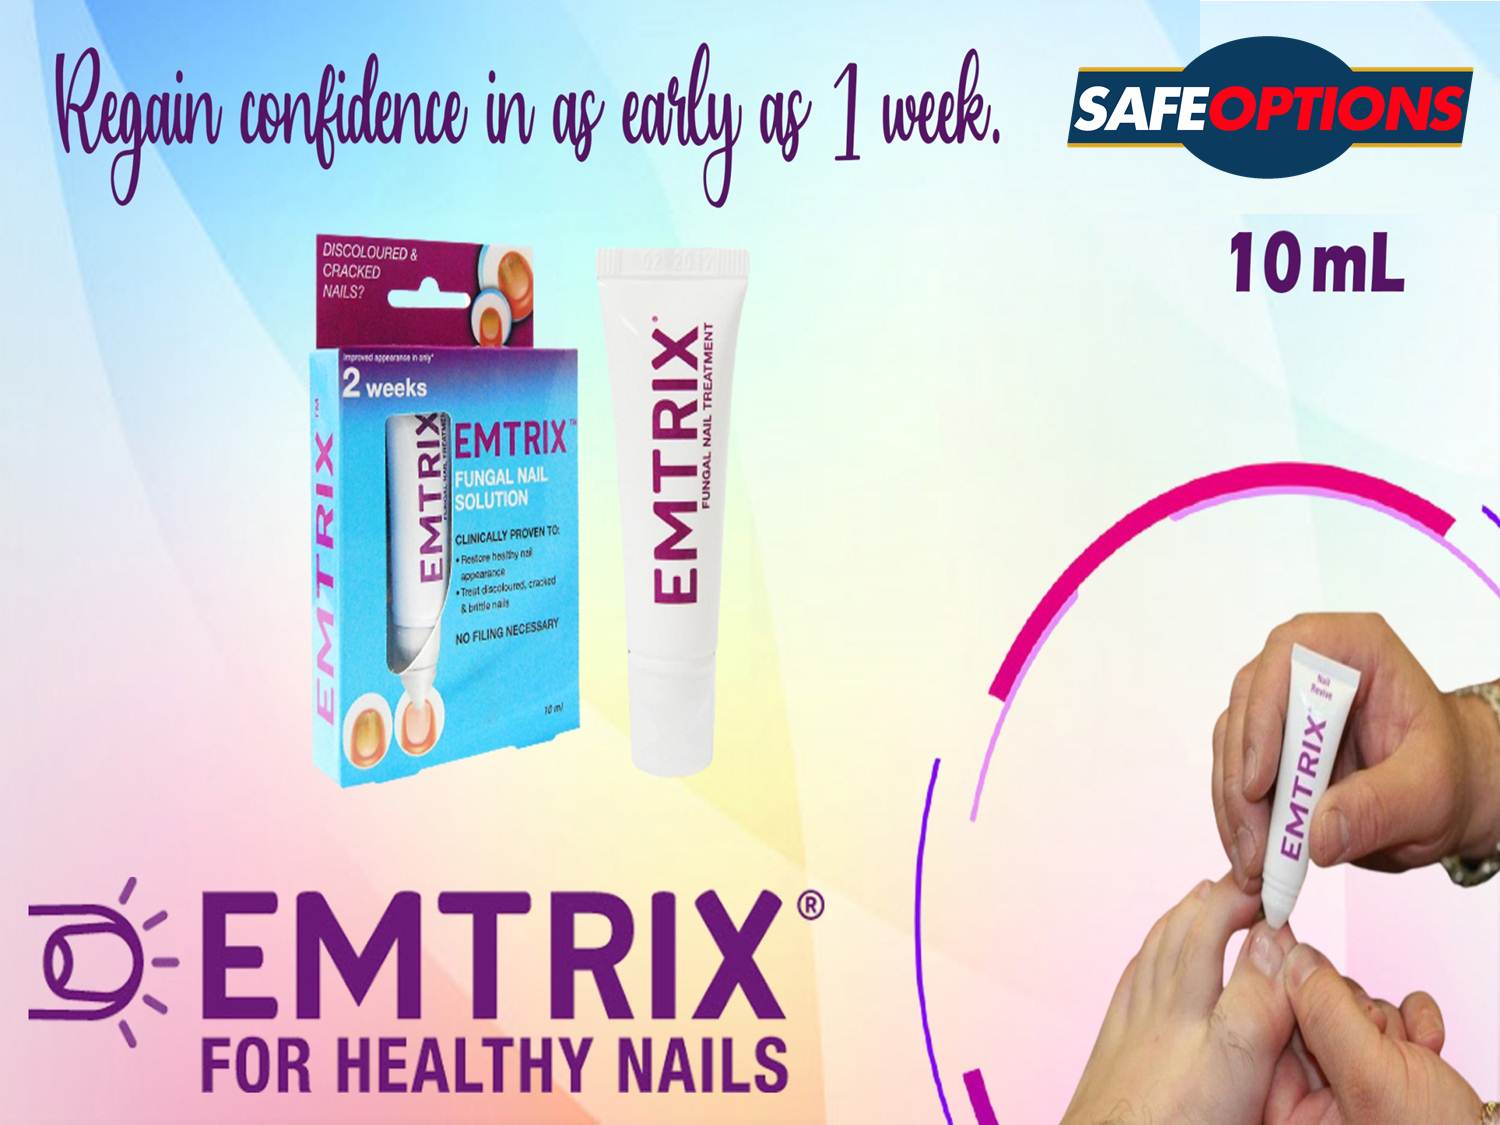 Emtrix Fungal Nail Treatment - YouTube